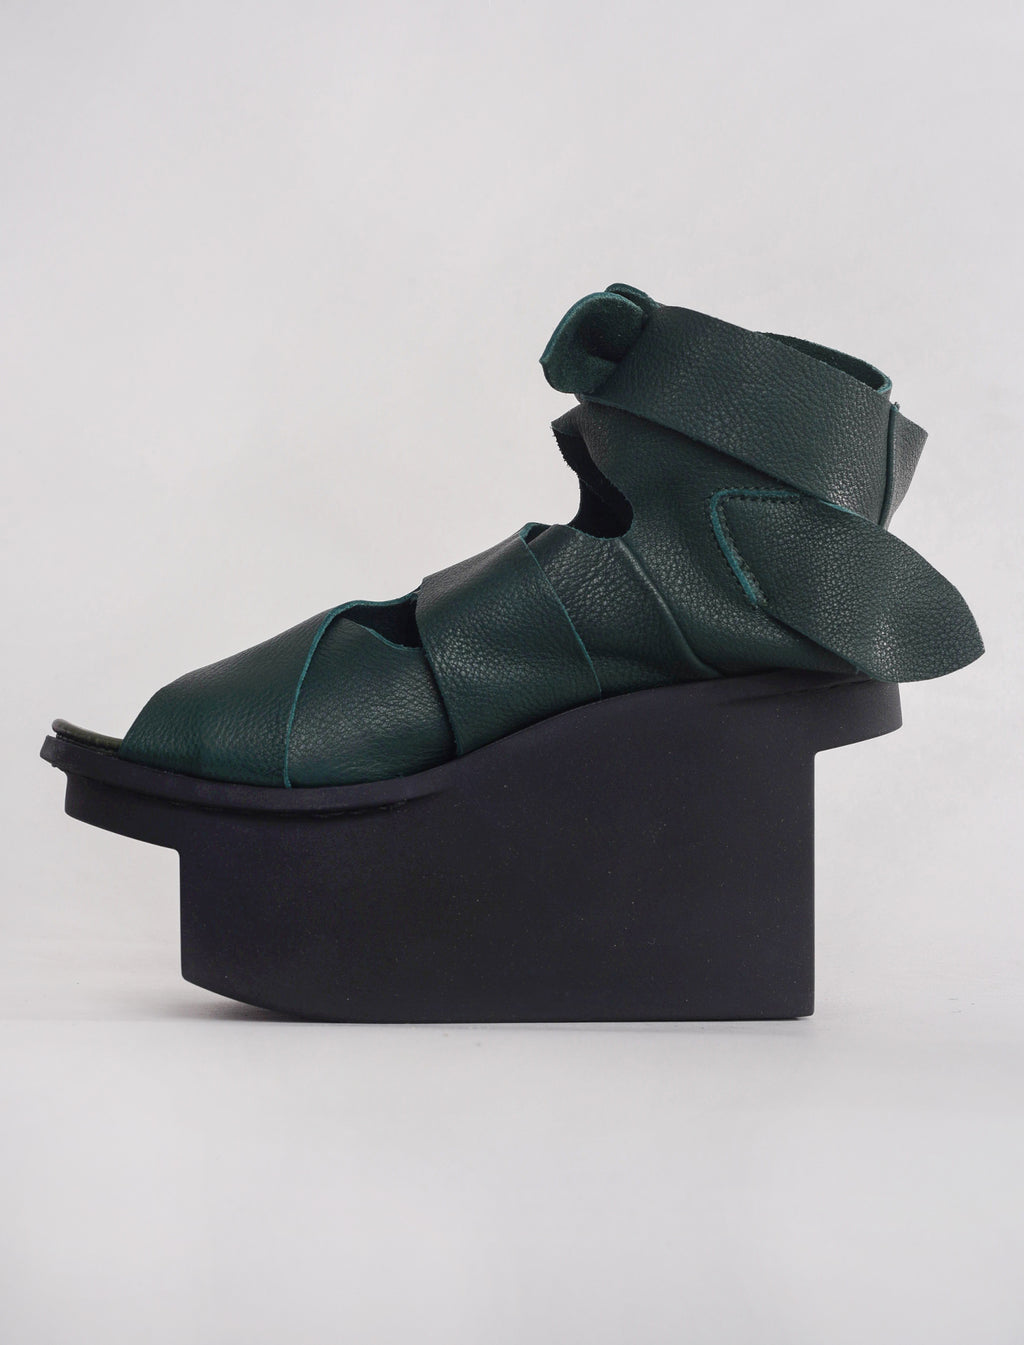 Trippen Shoes Liana Geisha, Forest VST 